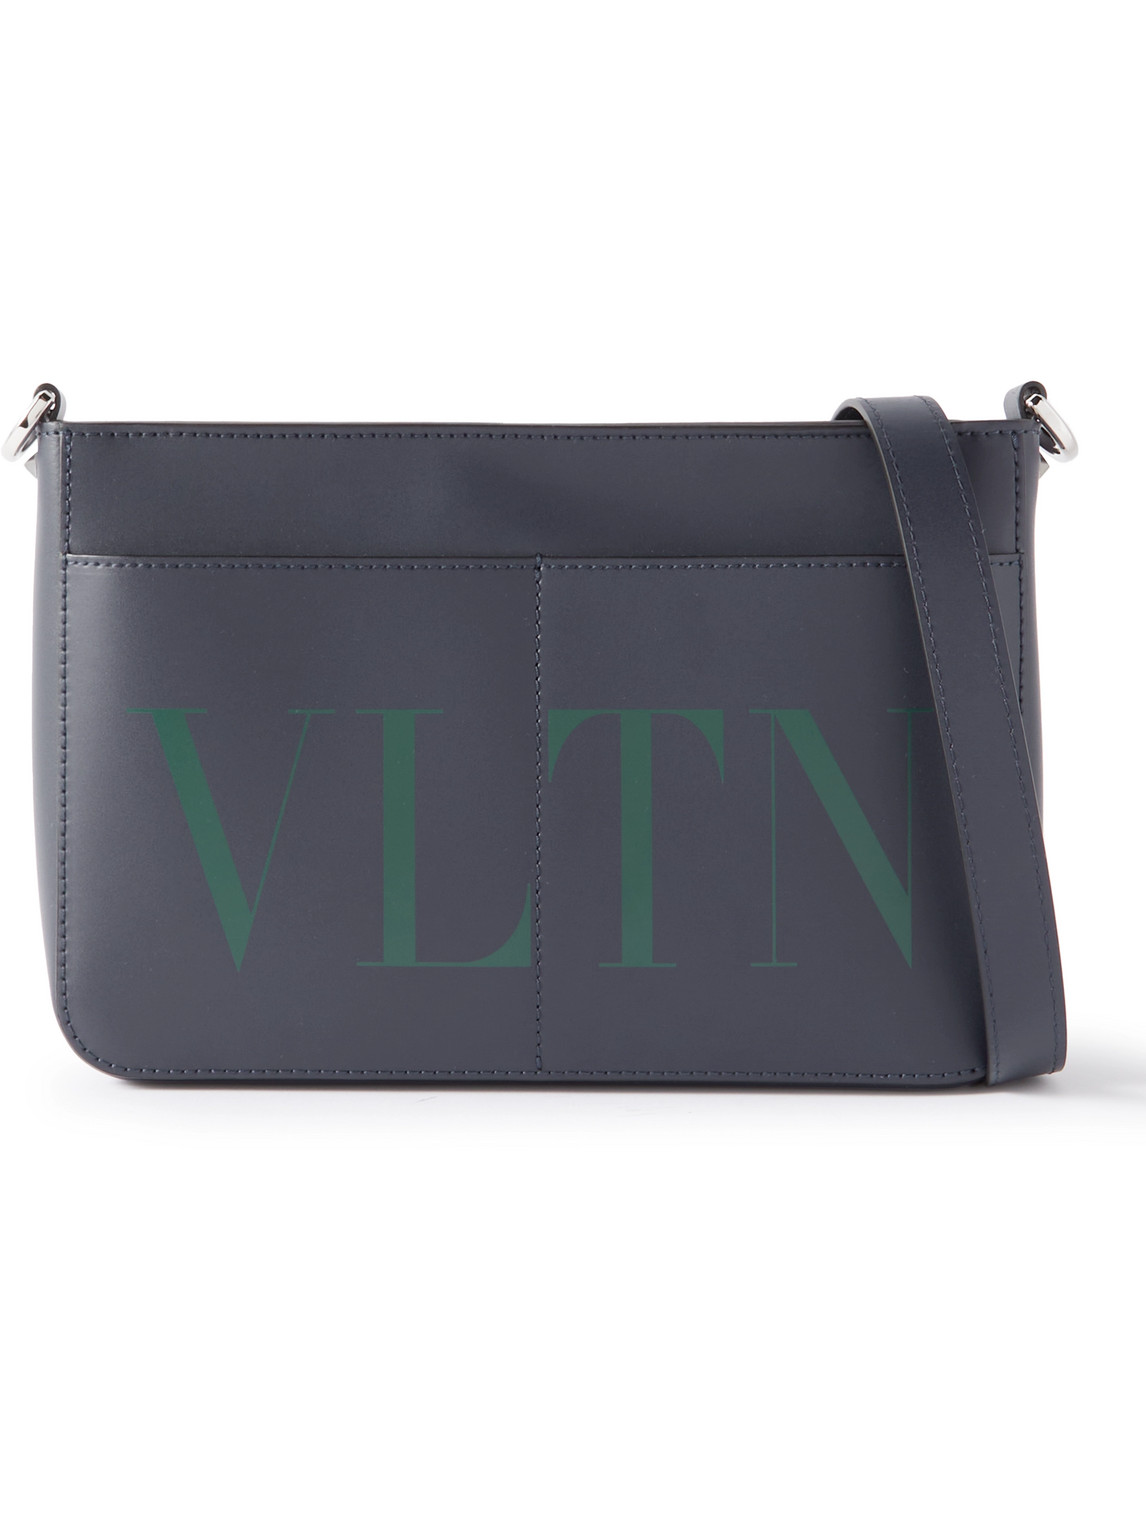 Valentino Garavani Logo-Print Leather Messenger Bag